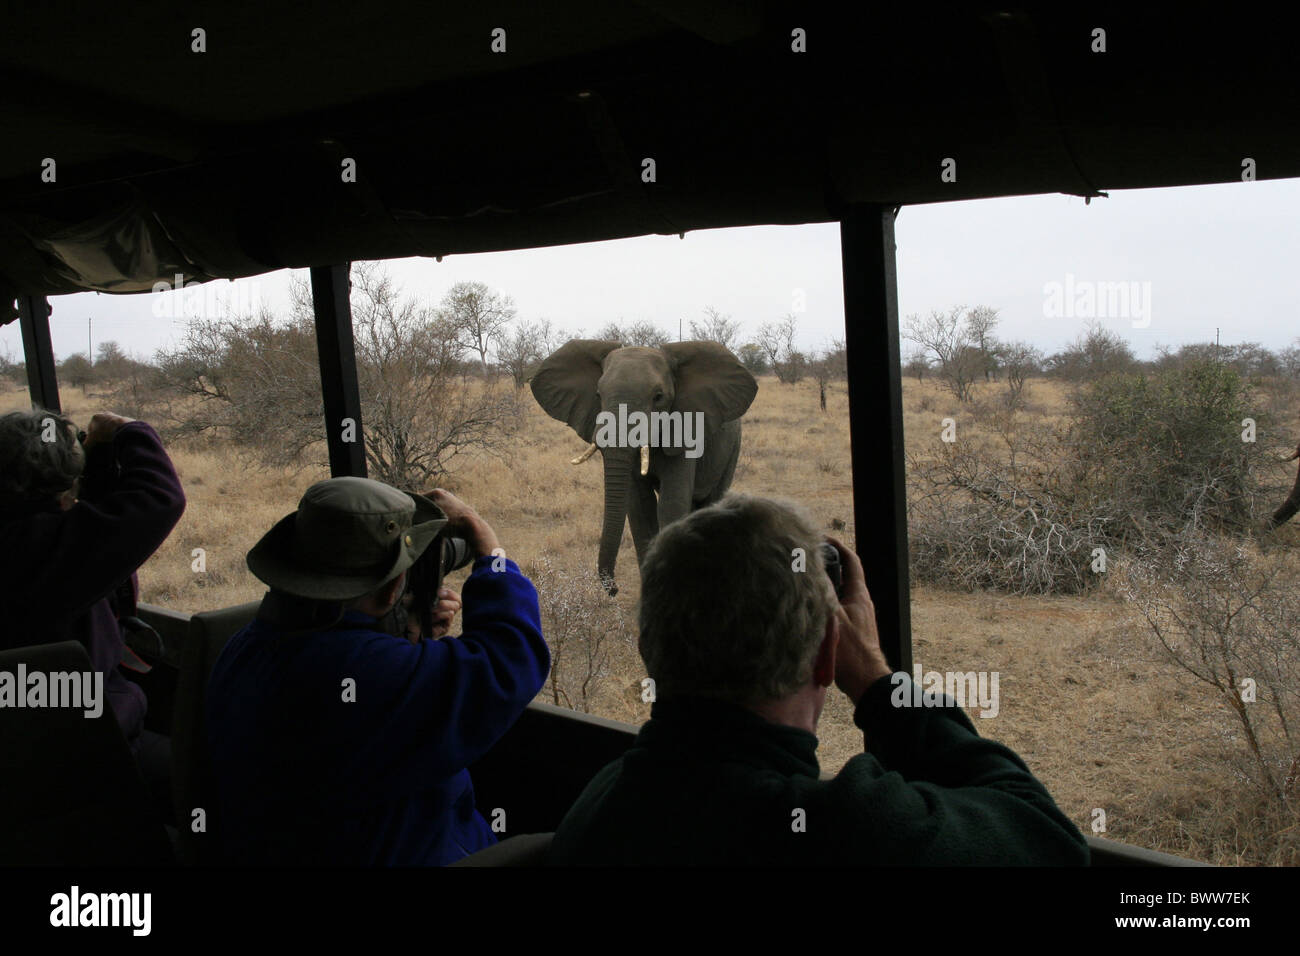 Elefante africano essendo photgraphed da safari Foto Stock